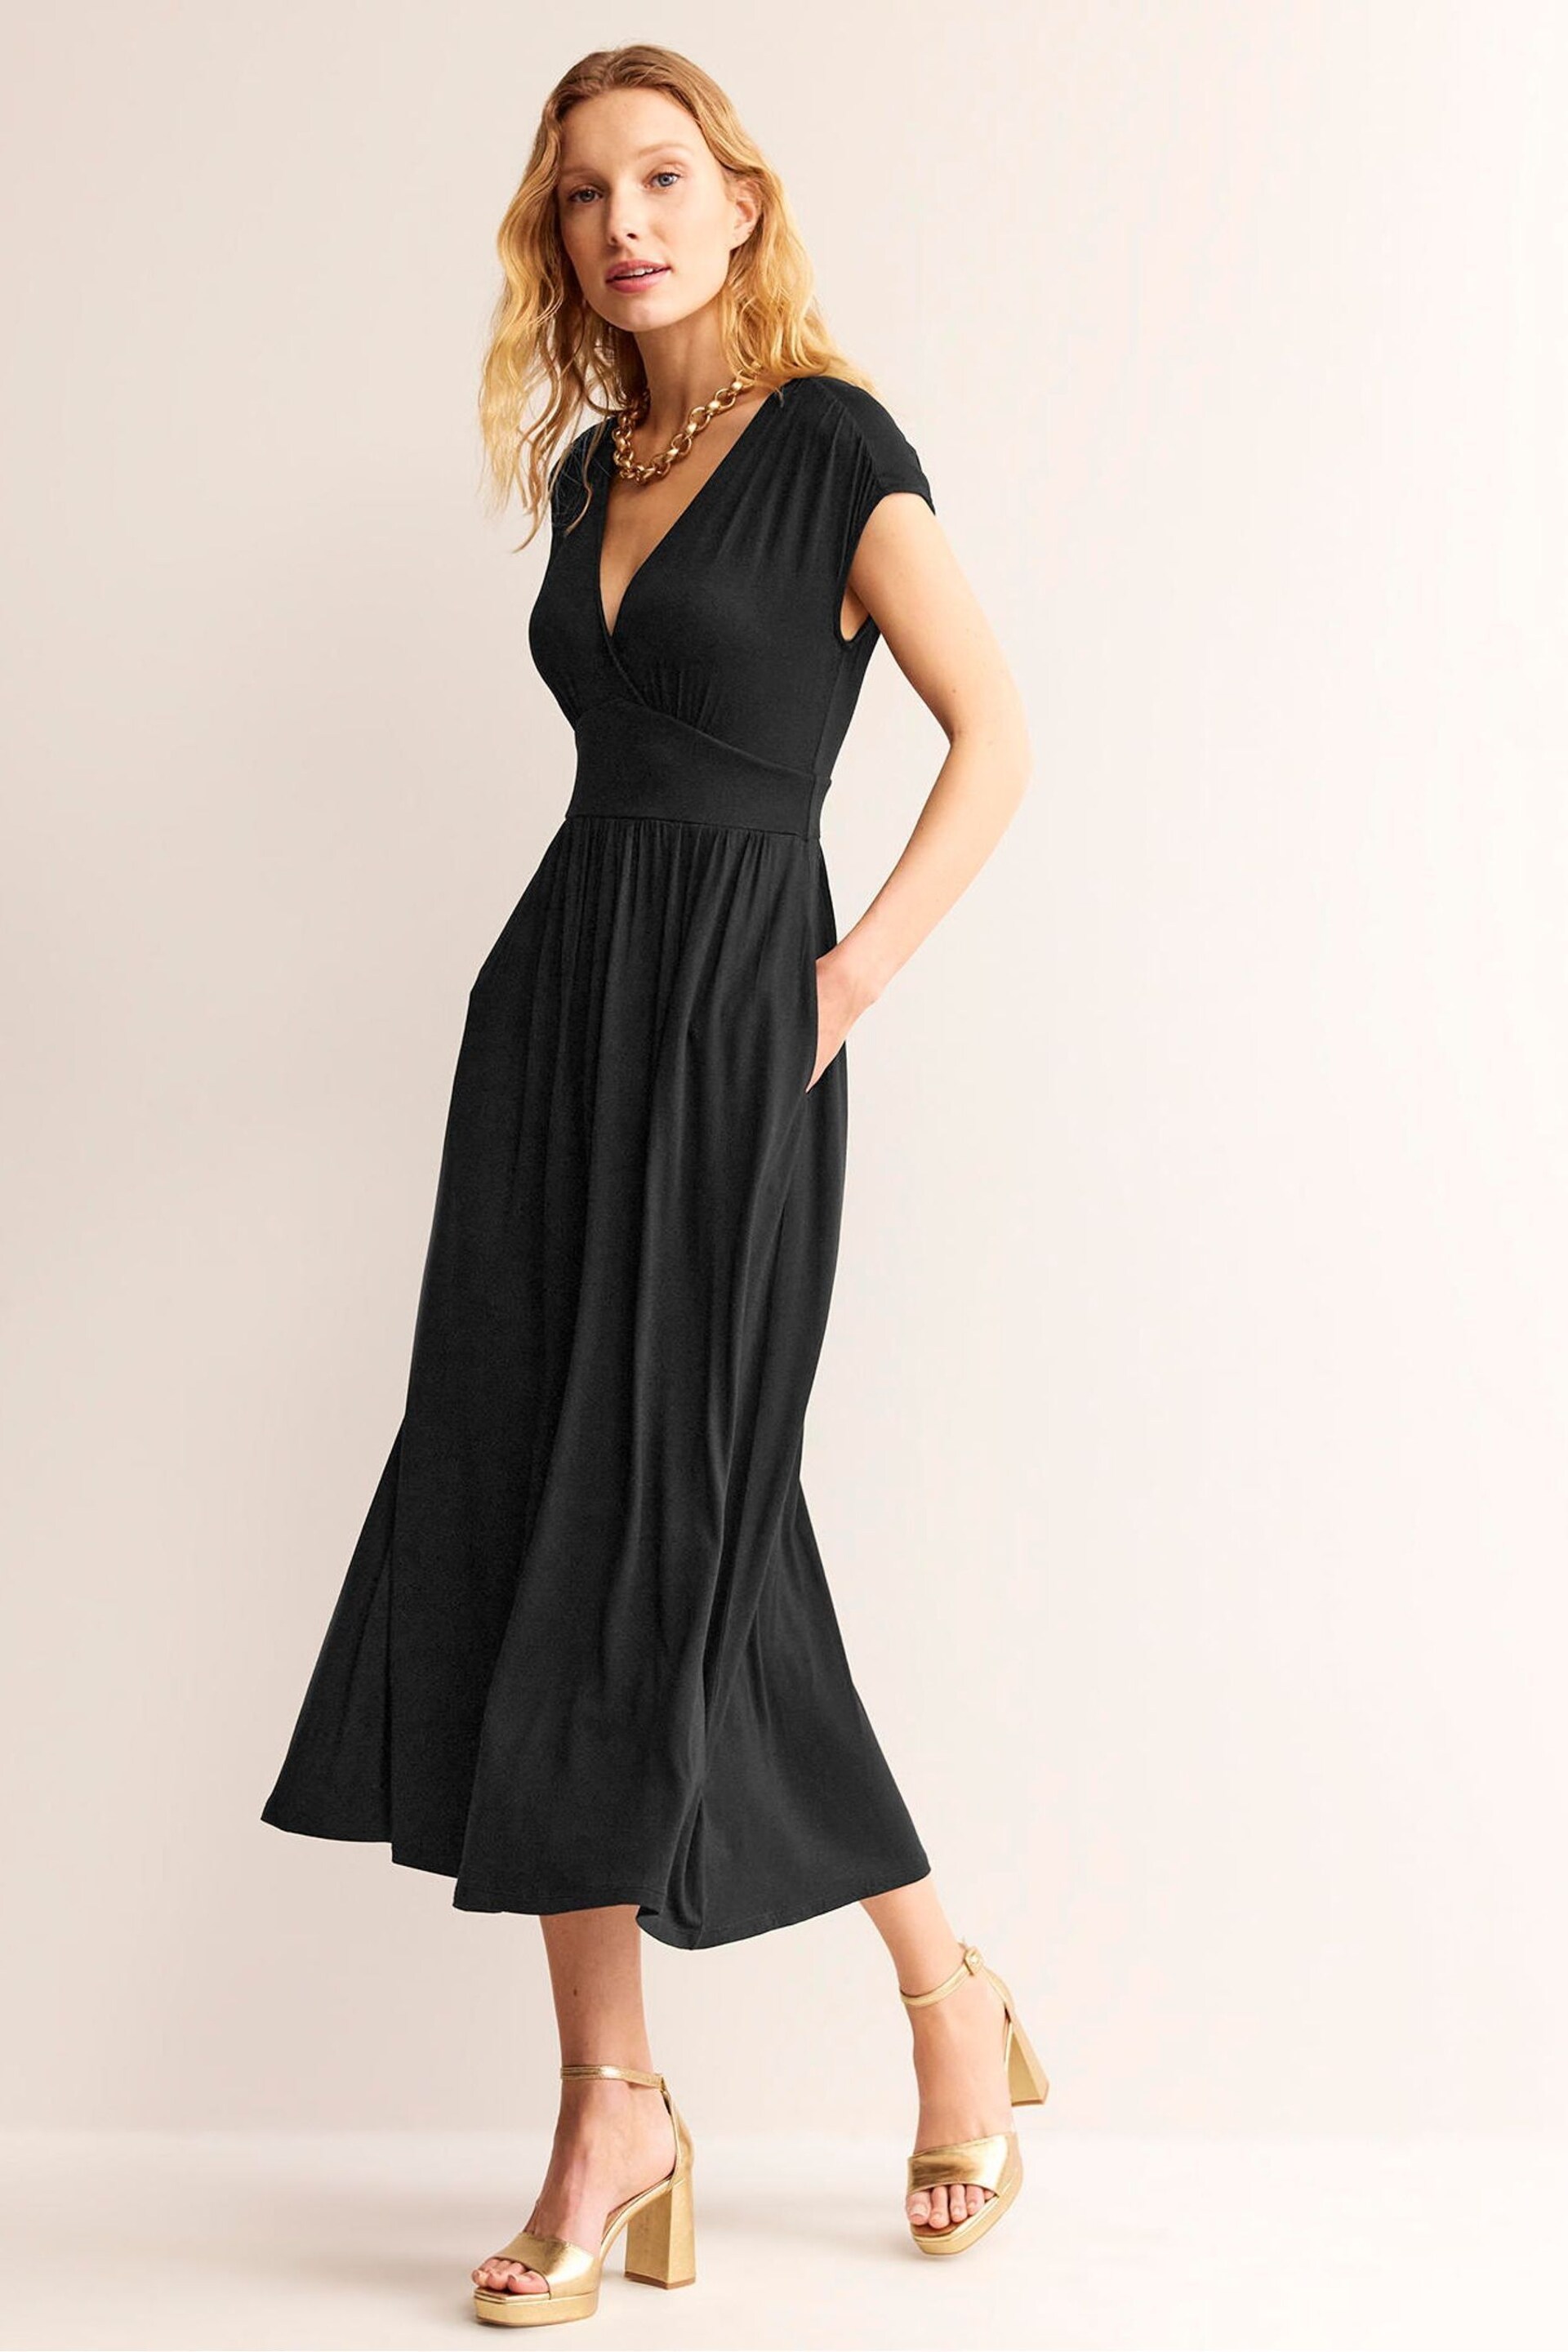 Boden Black Vanessa Wrap Jersey Maxi Dress - Image 1 of 5